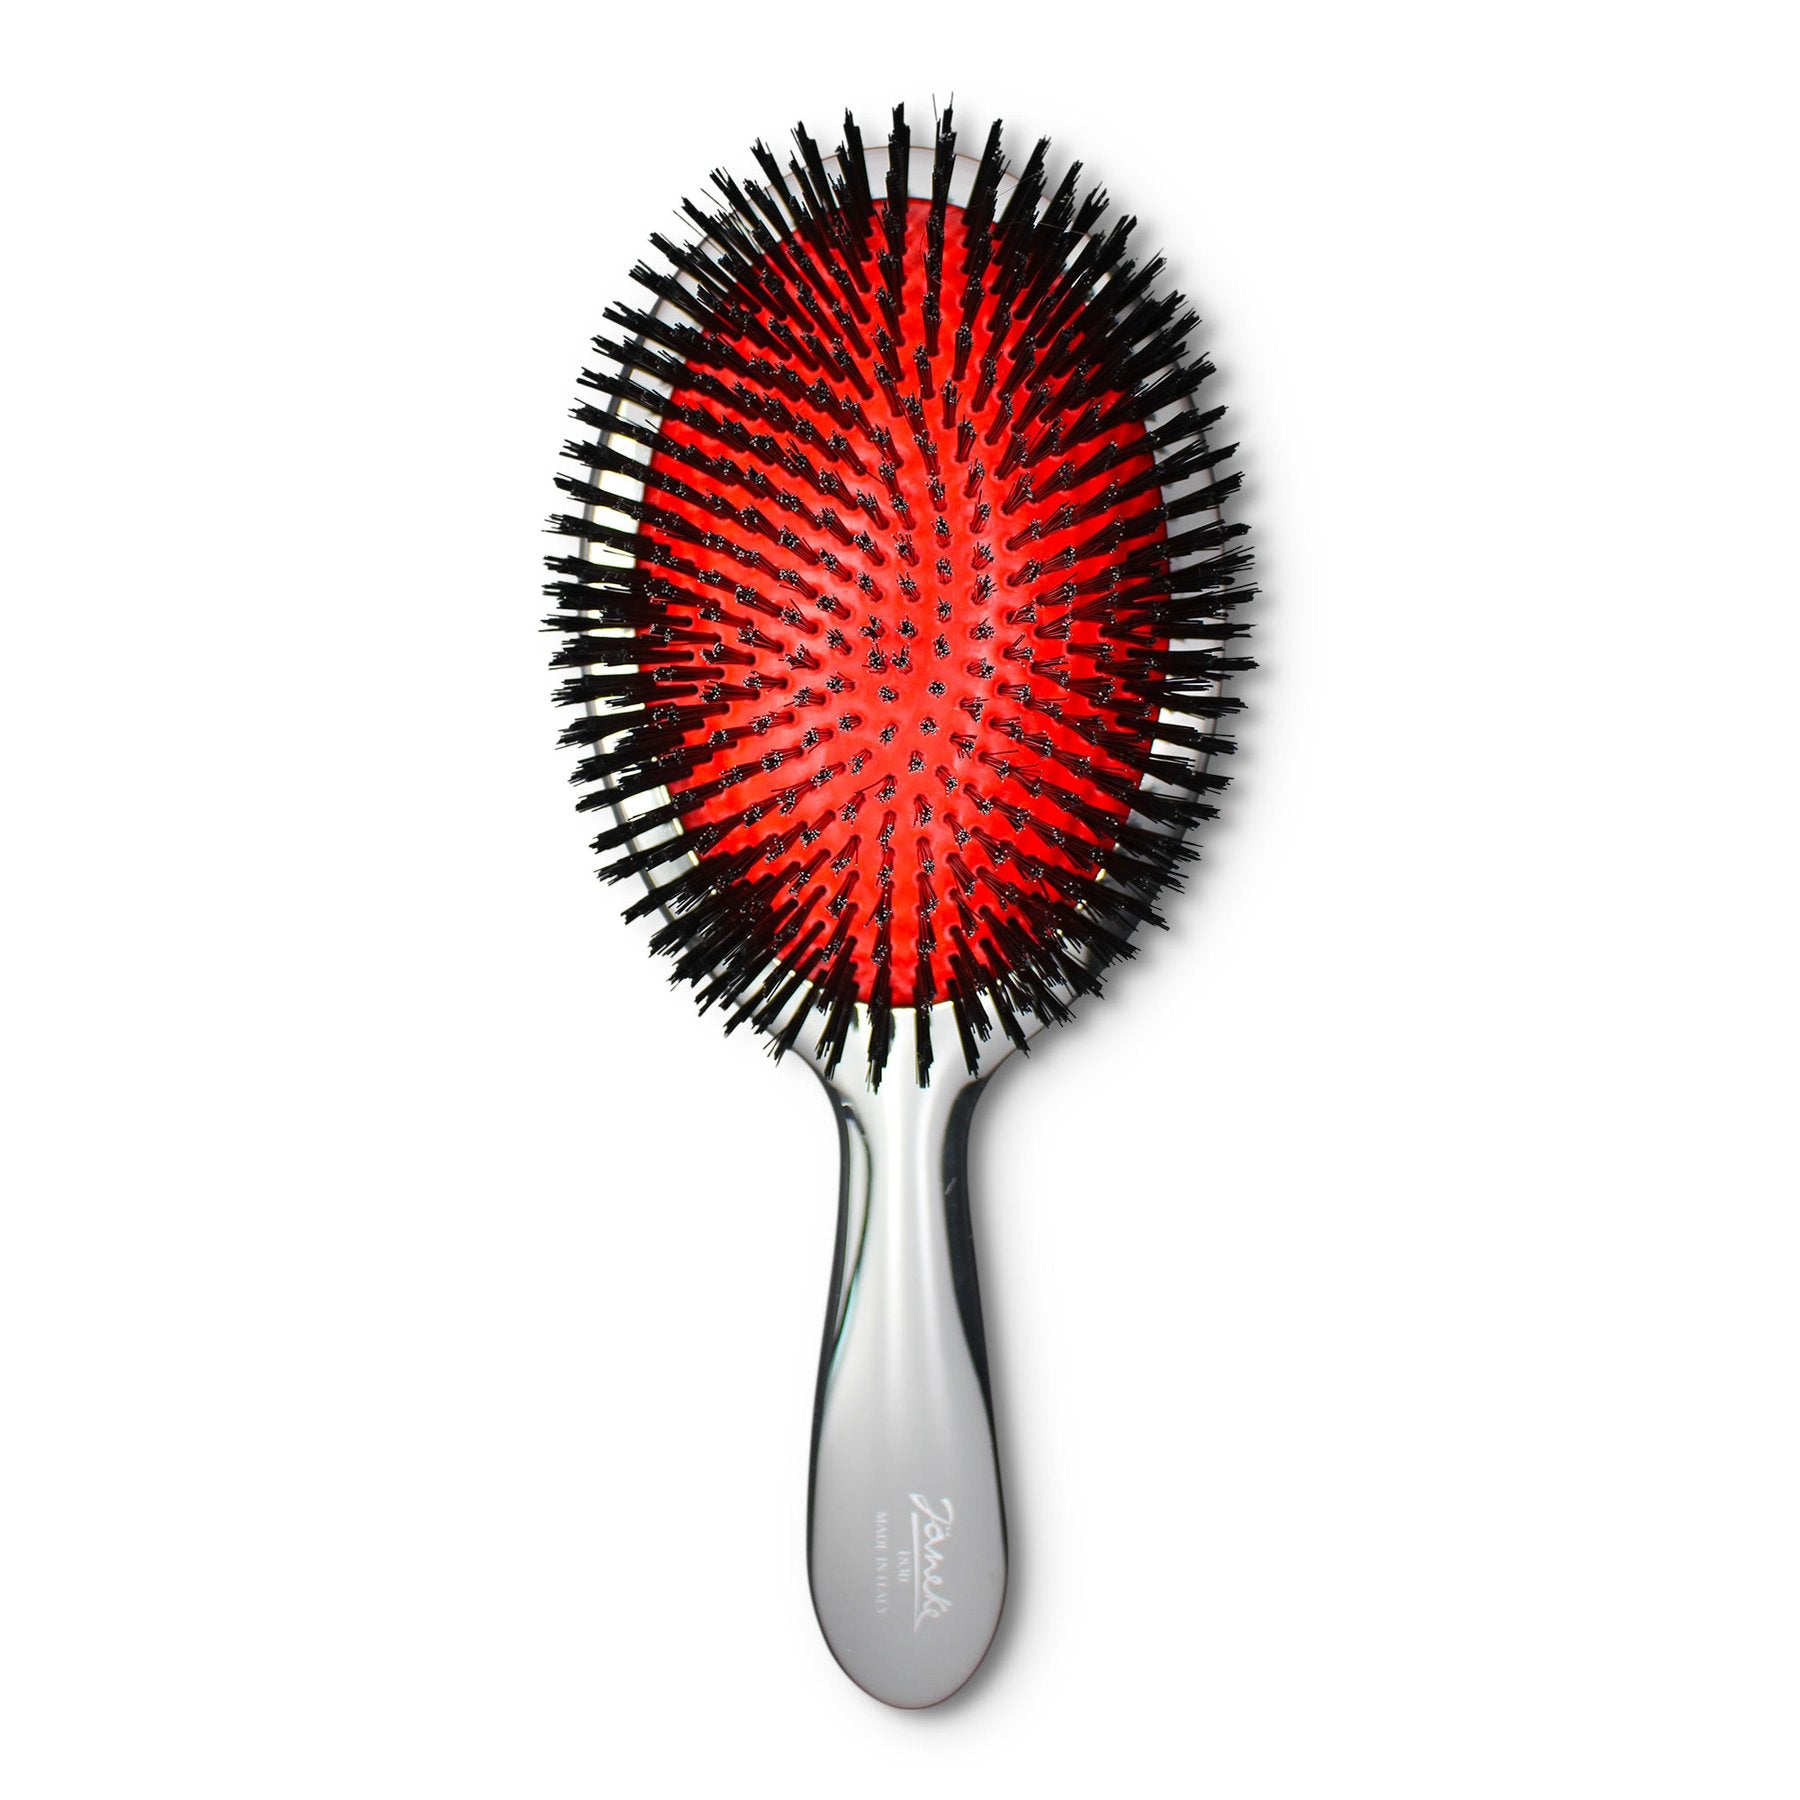 Boar Bristle Hairbrushes